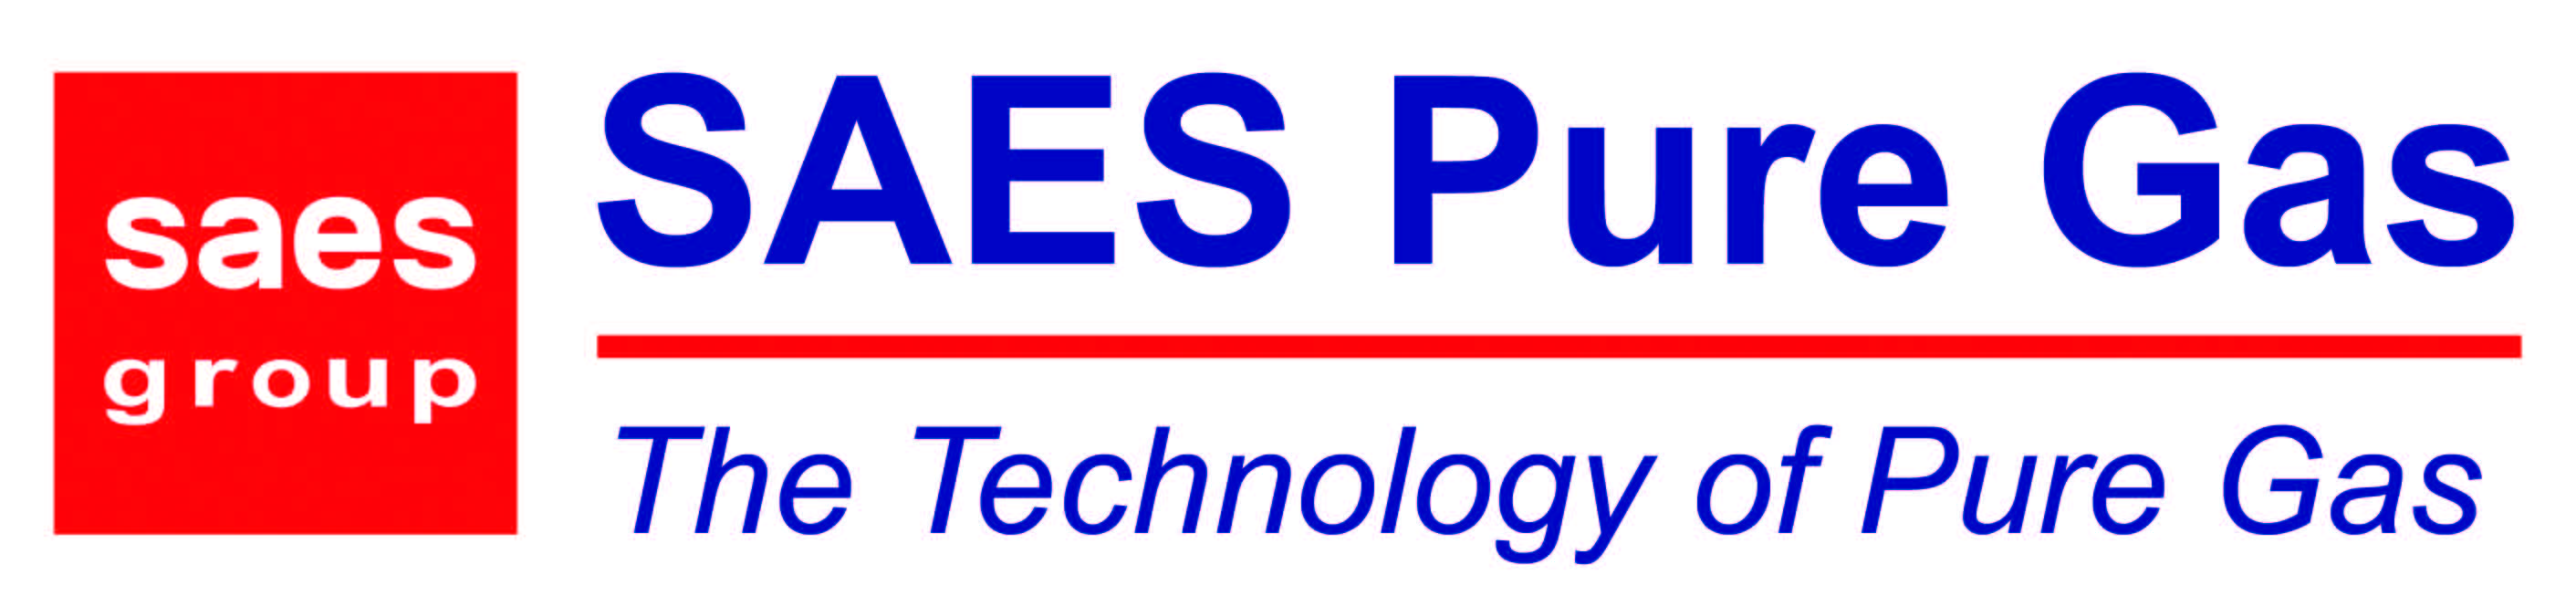 SAES Pure Gas Logo